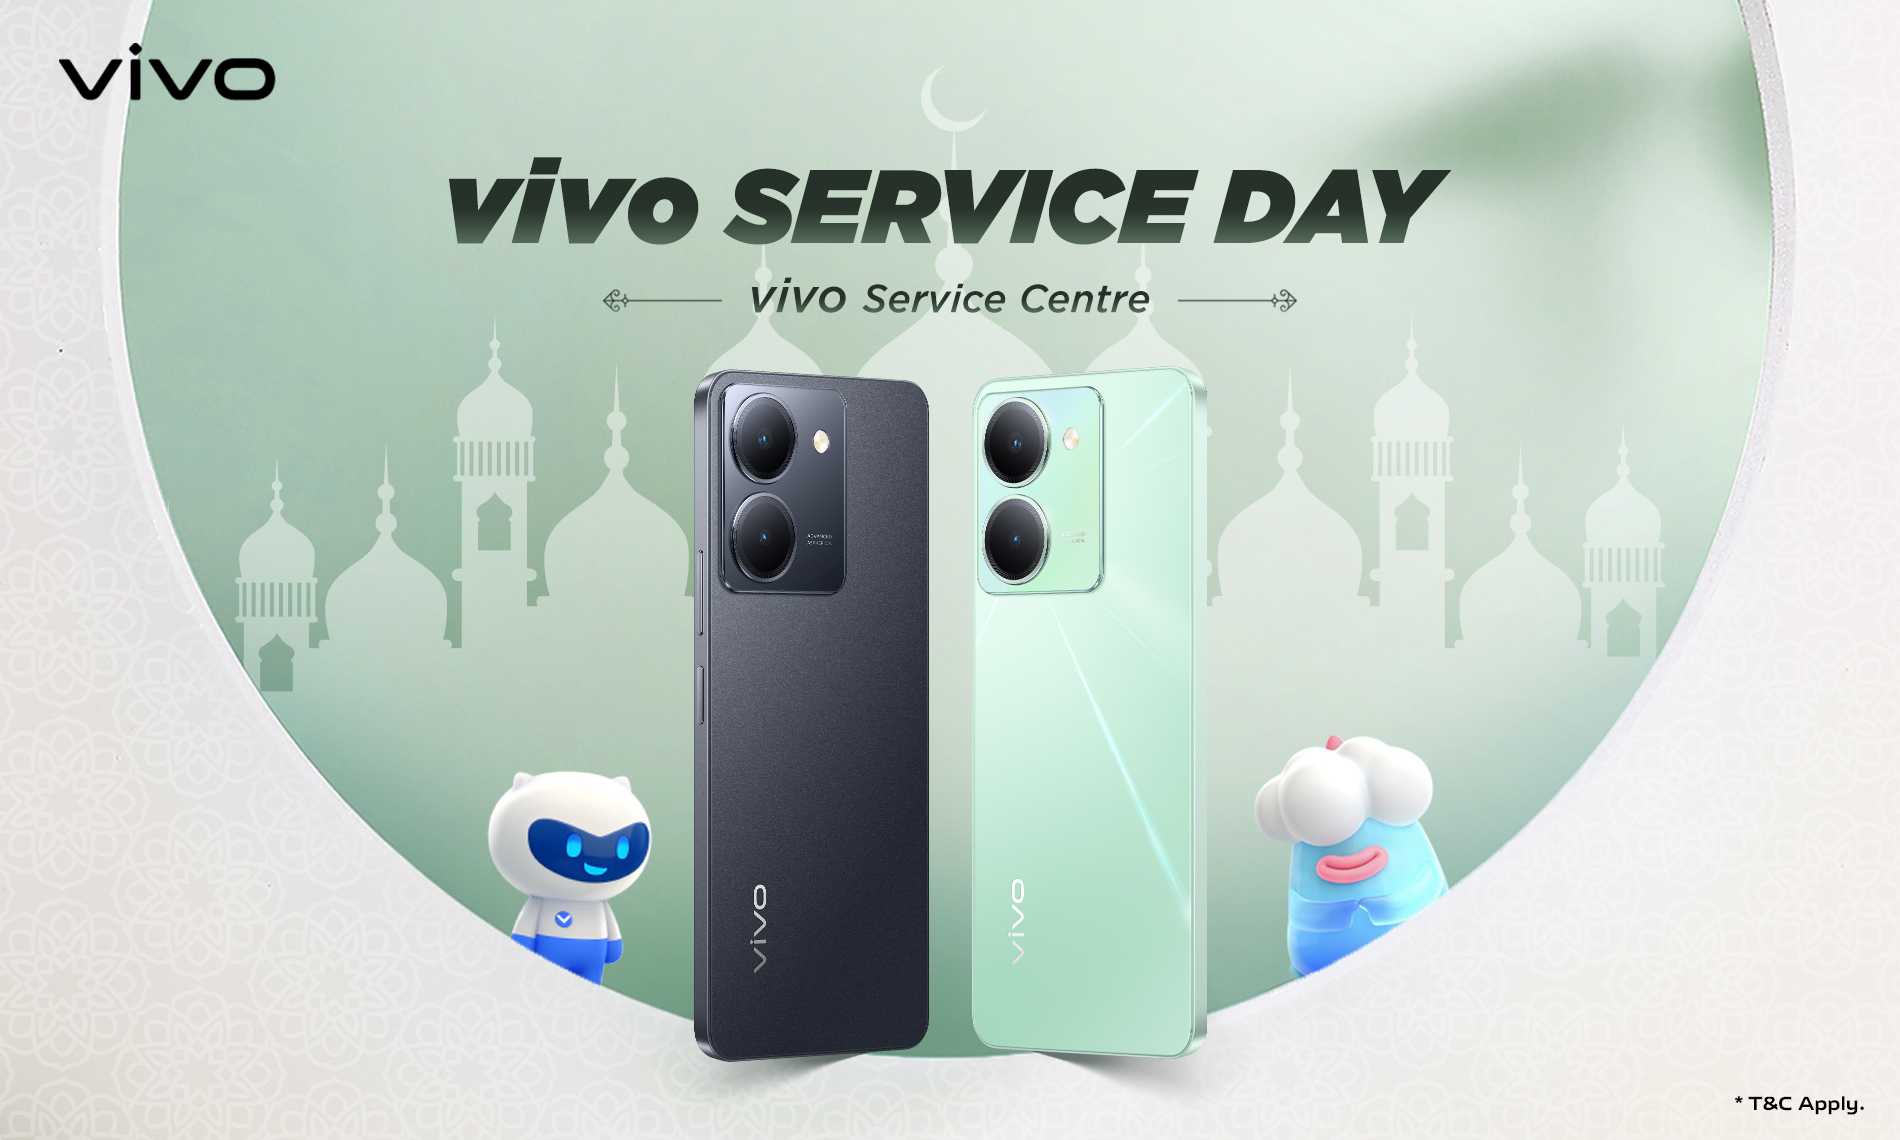 vivo Service Day in July